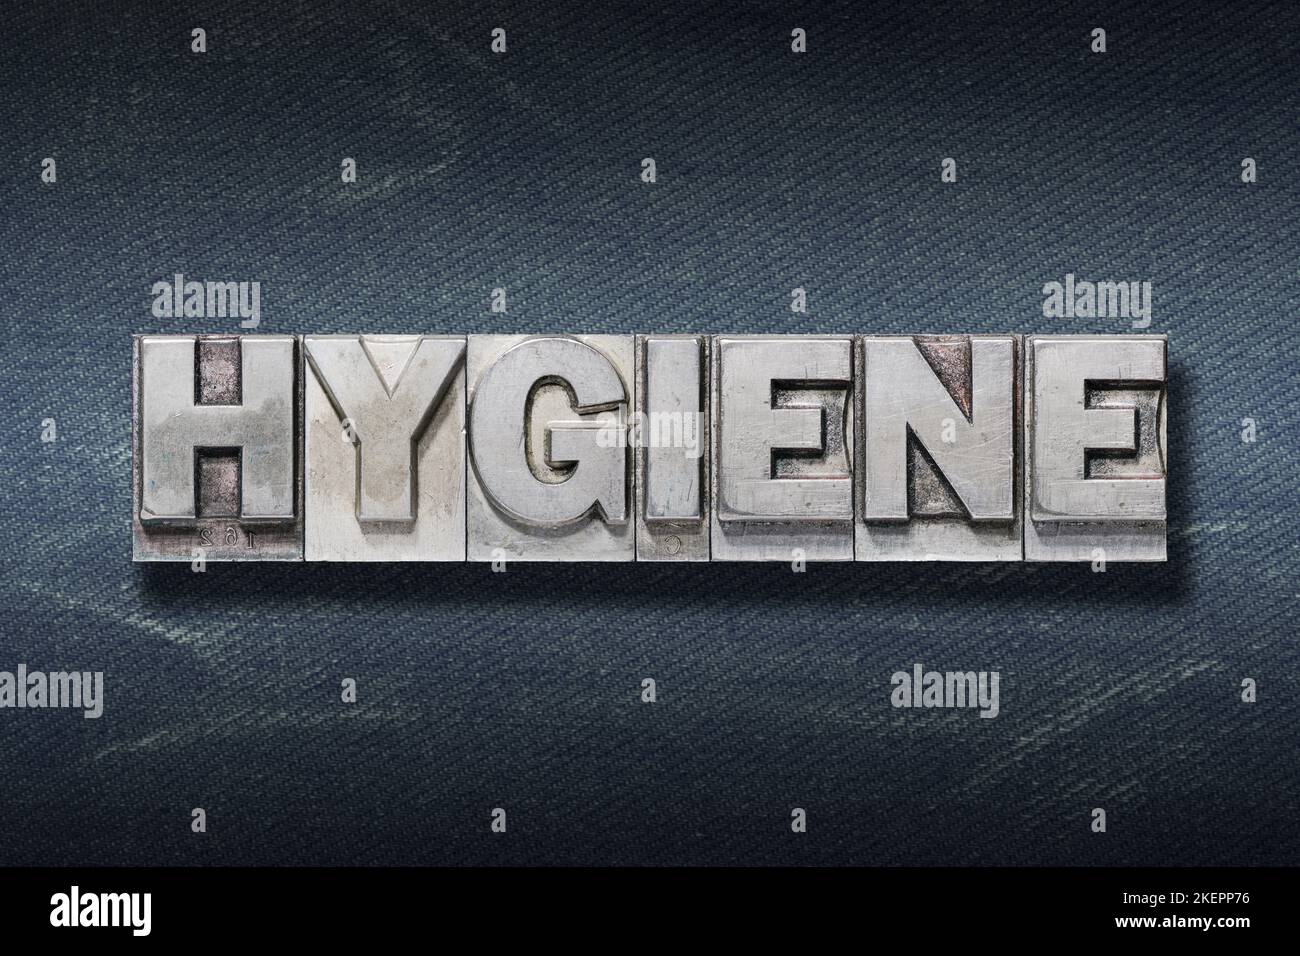 hygiene word made from metallic letterpress on dark jeans background Stock Photo